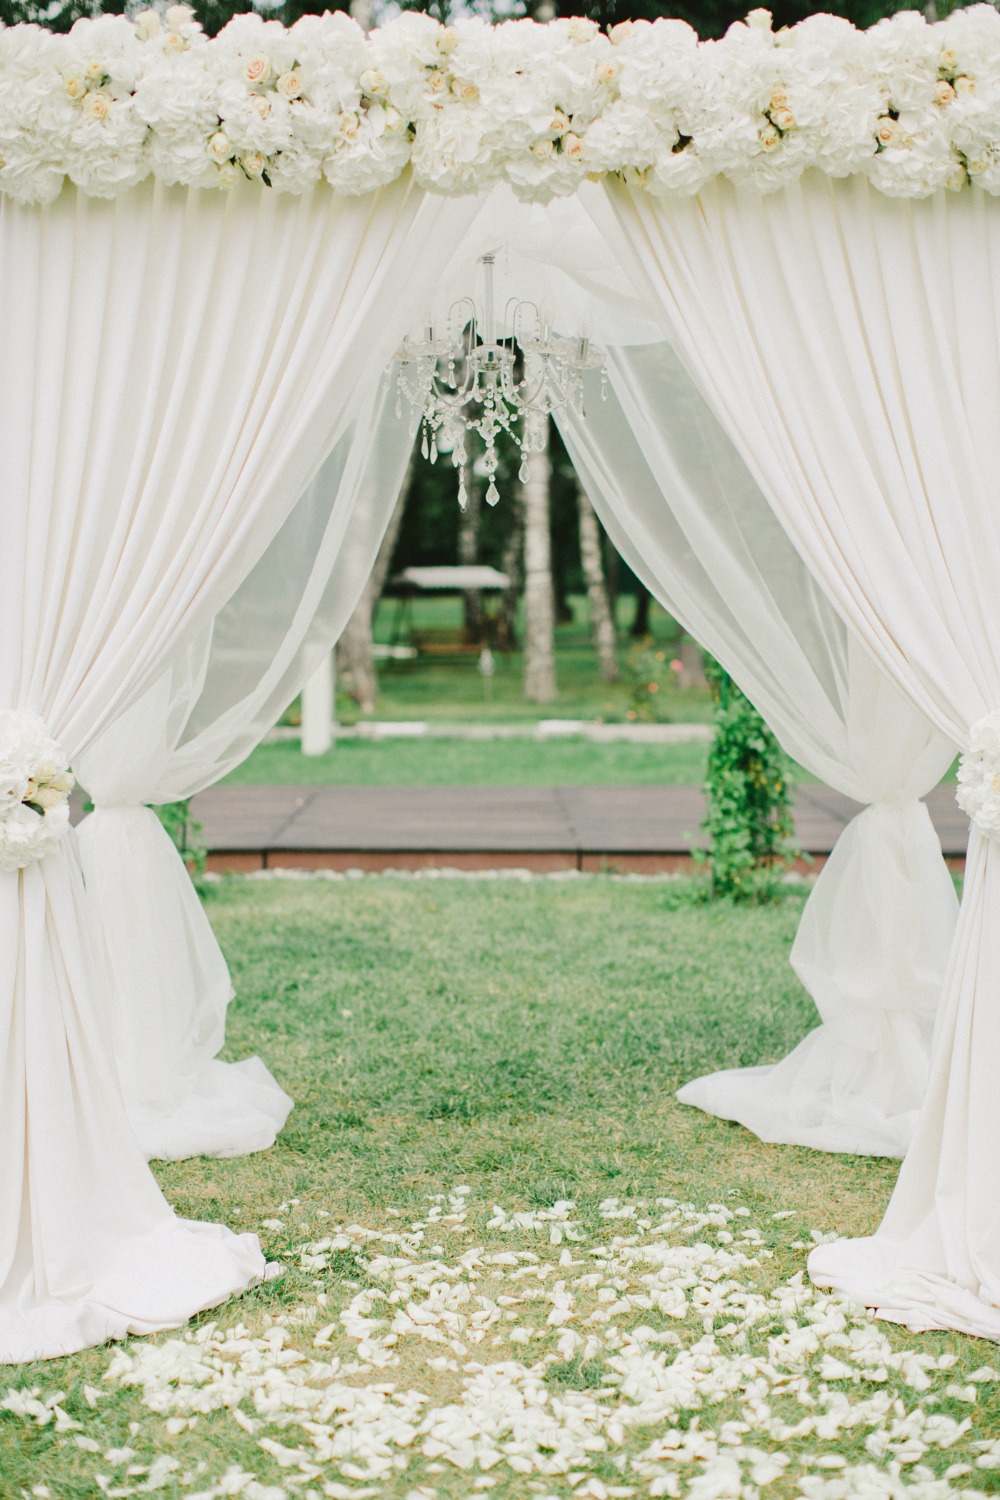 White wedding arbor with chandelier